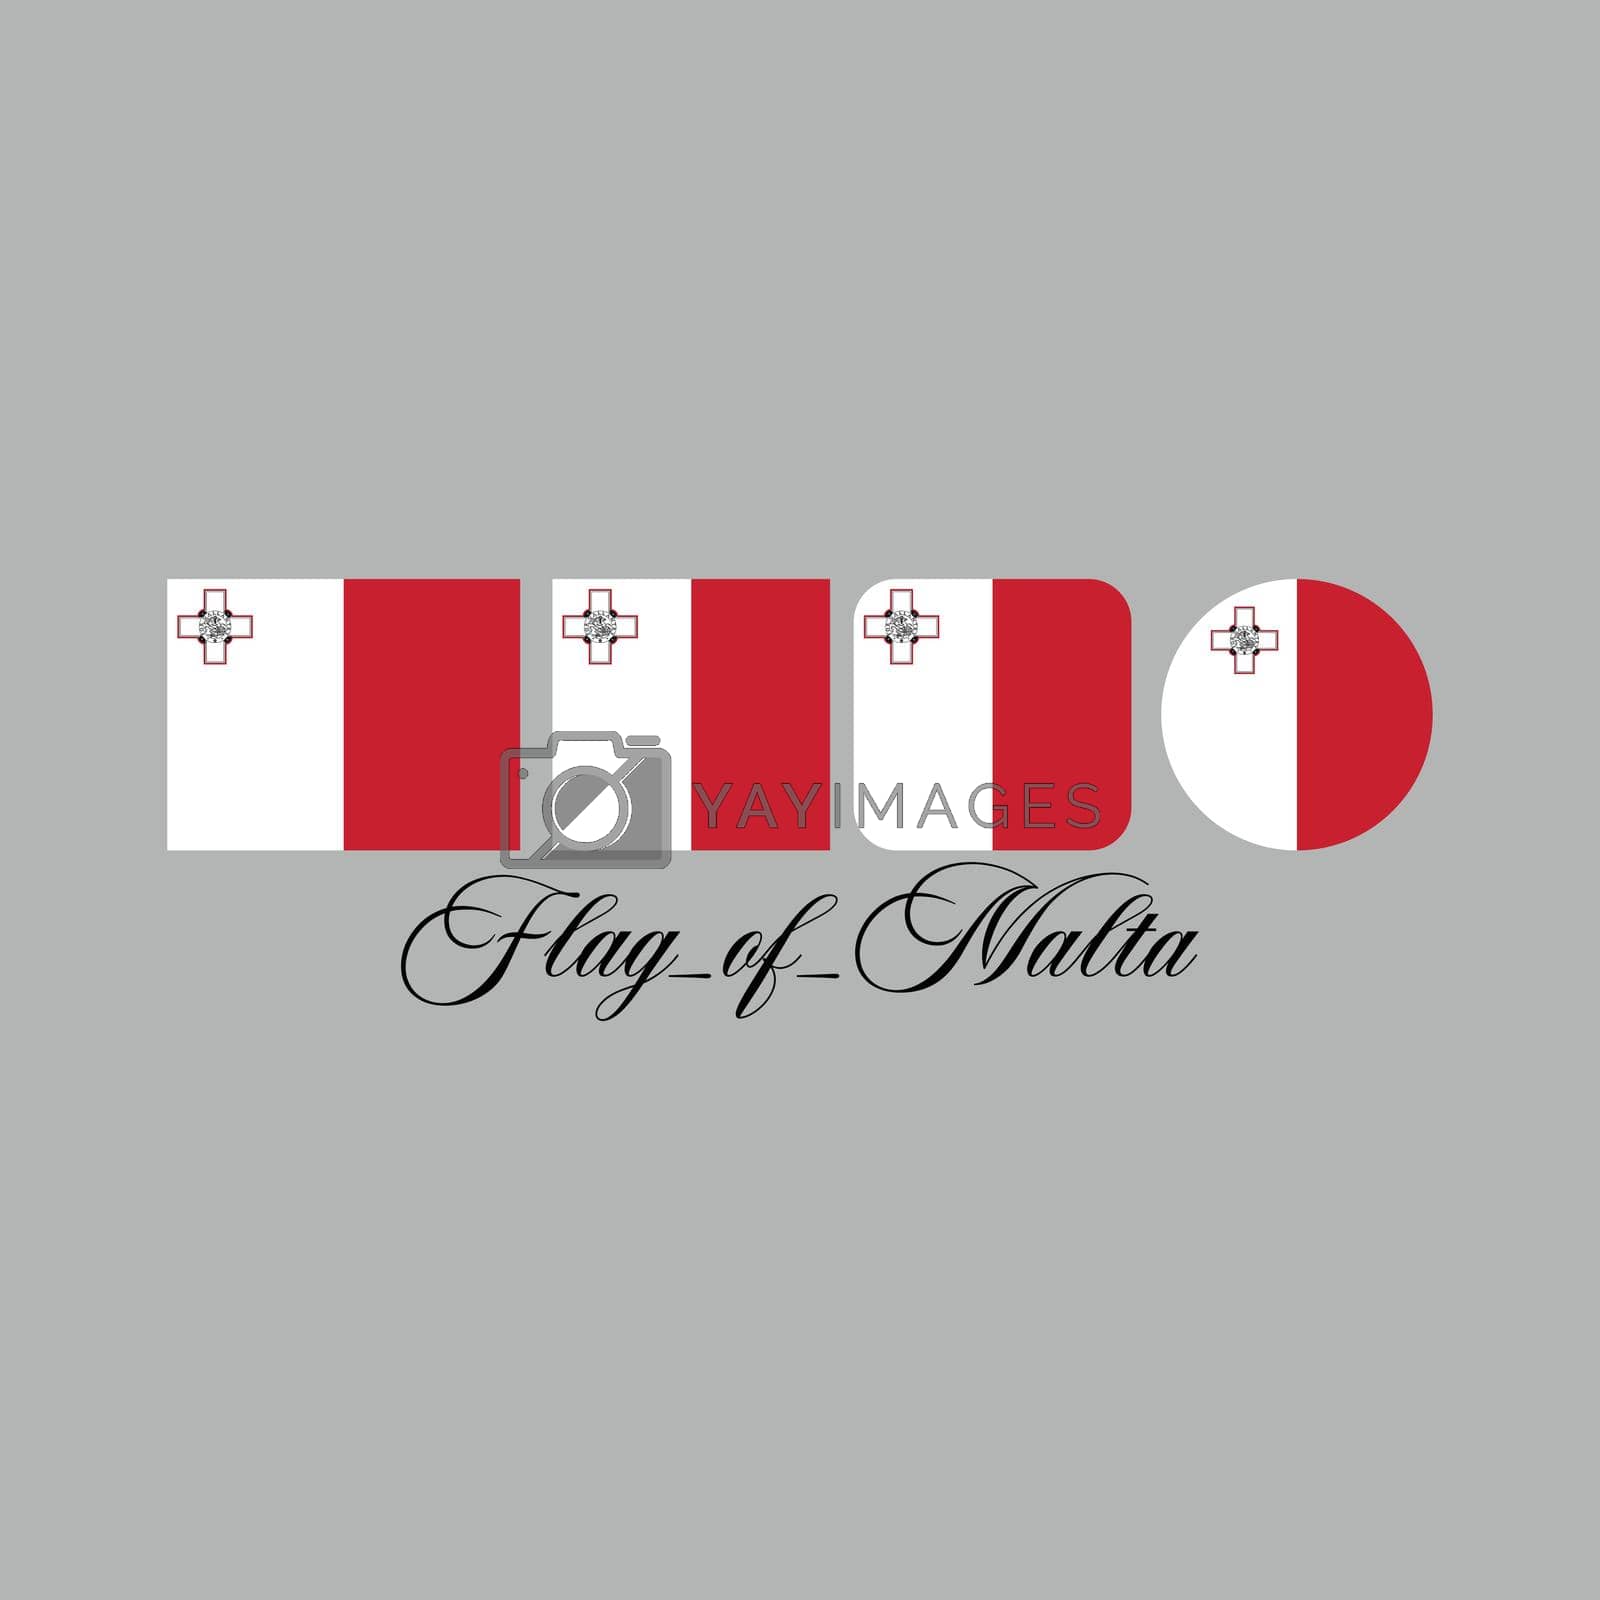 Royalty free image of flag of malta nation design artwork by Menyoen